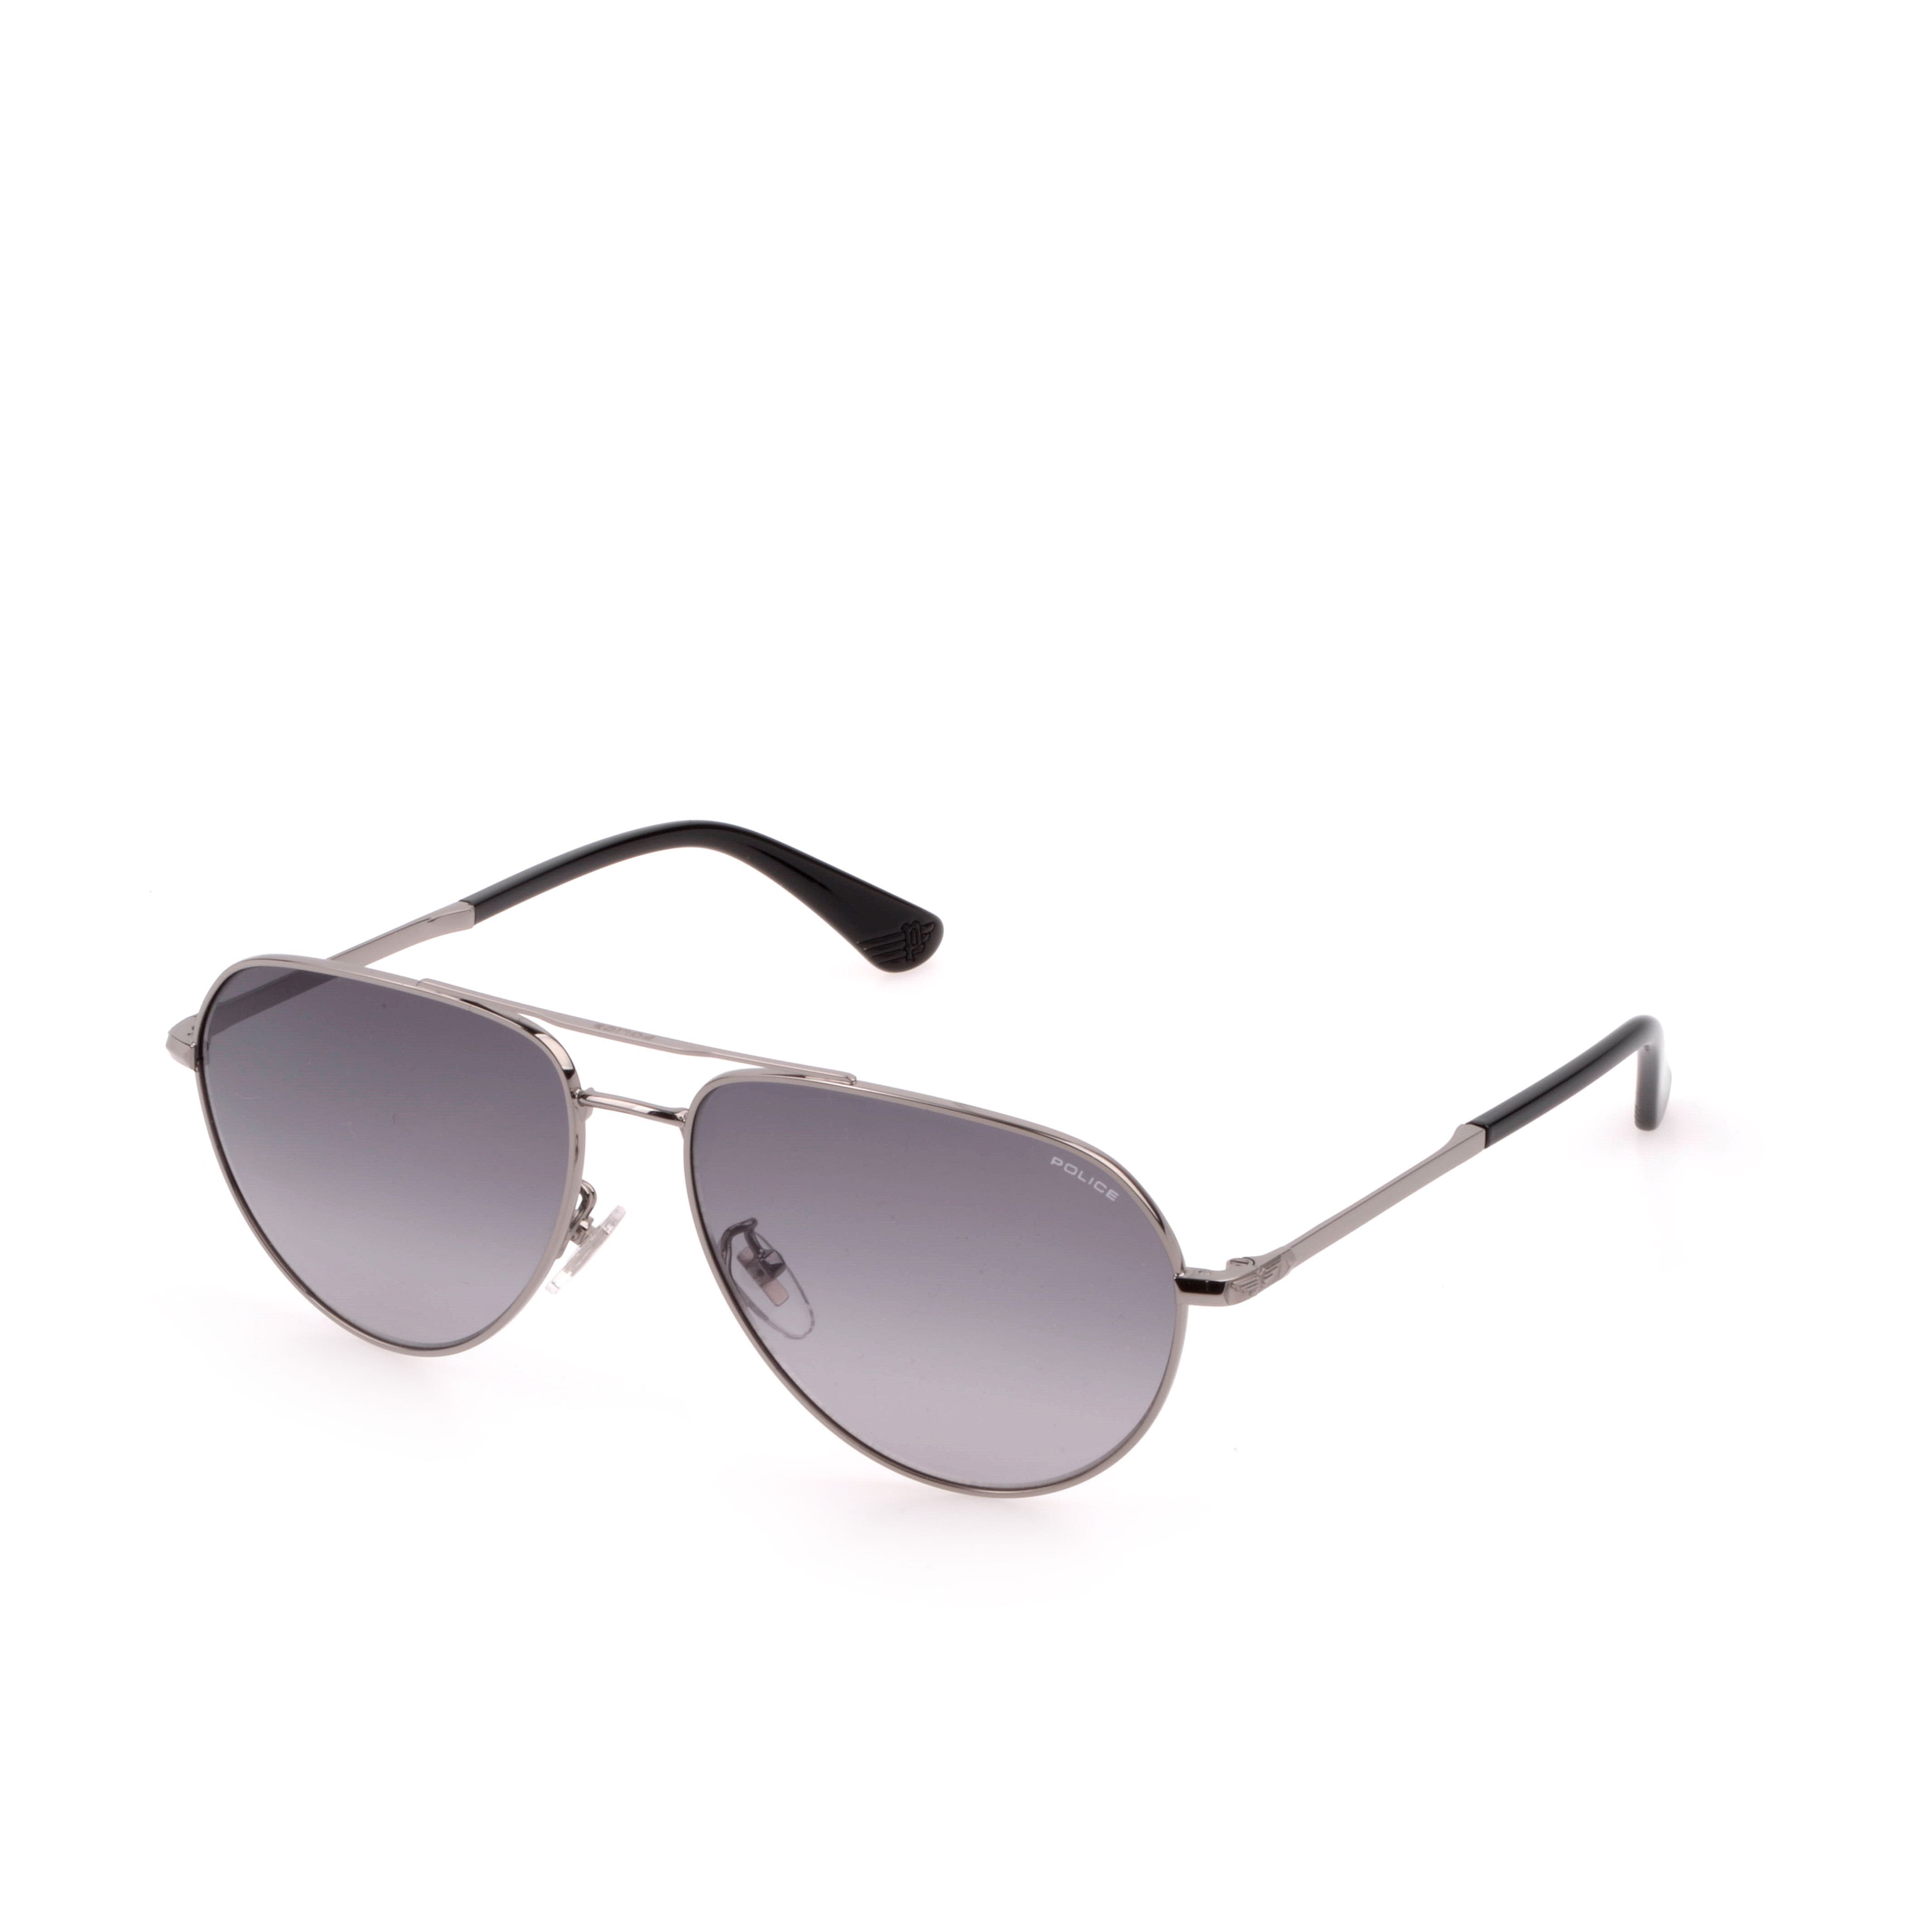 SPLE25 Pilot Sunglasses 509 - size 59